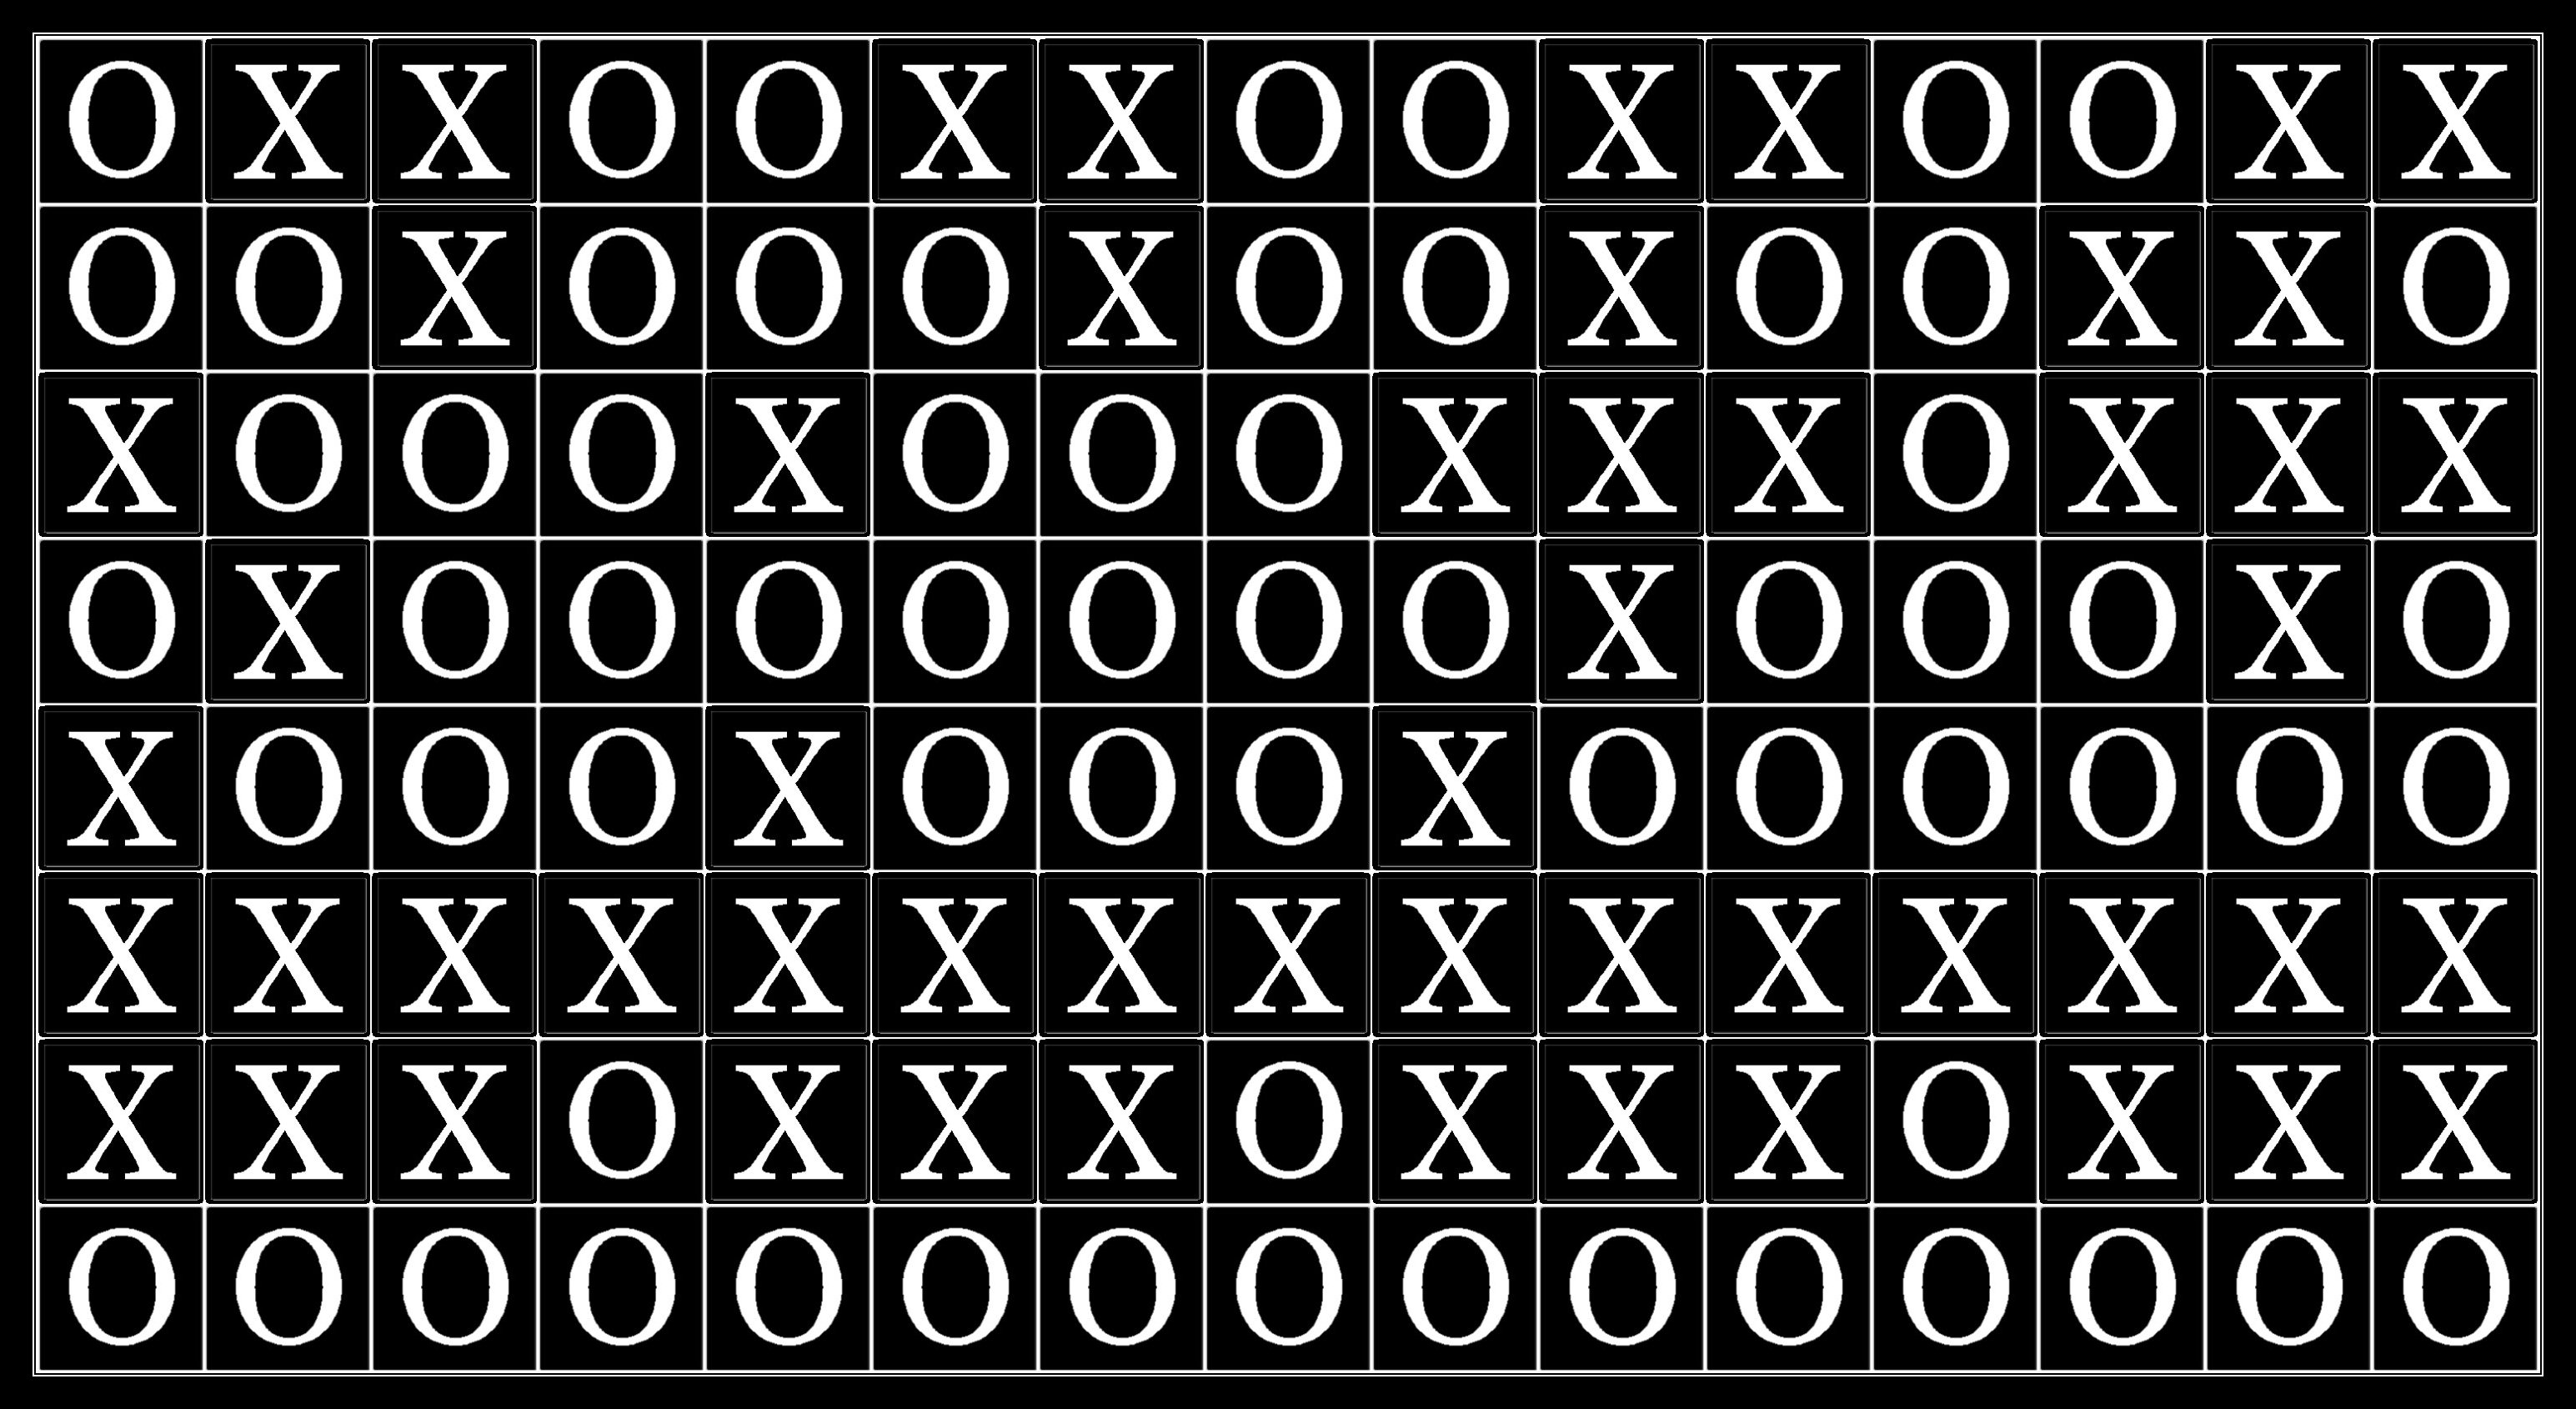  An Inconspicious Draw (ASCII representation of a short phrase) 